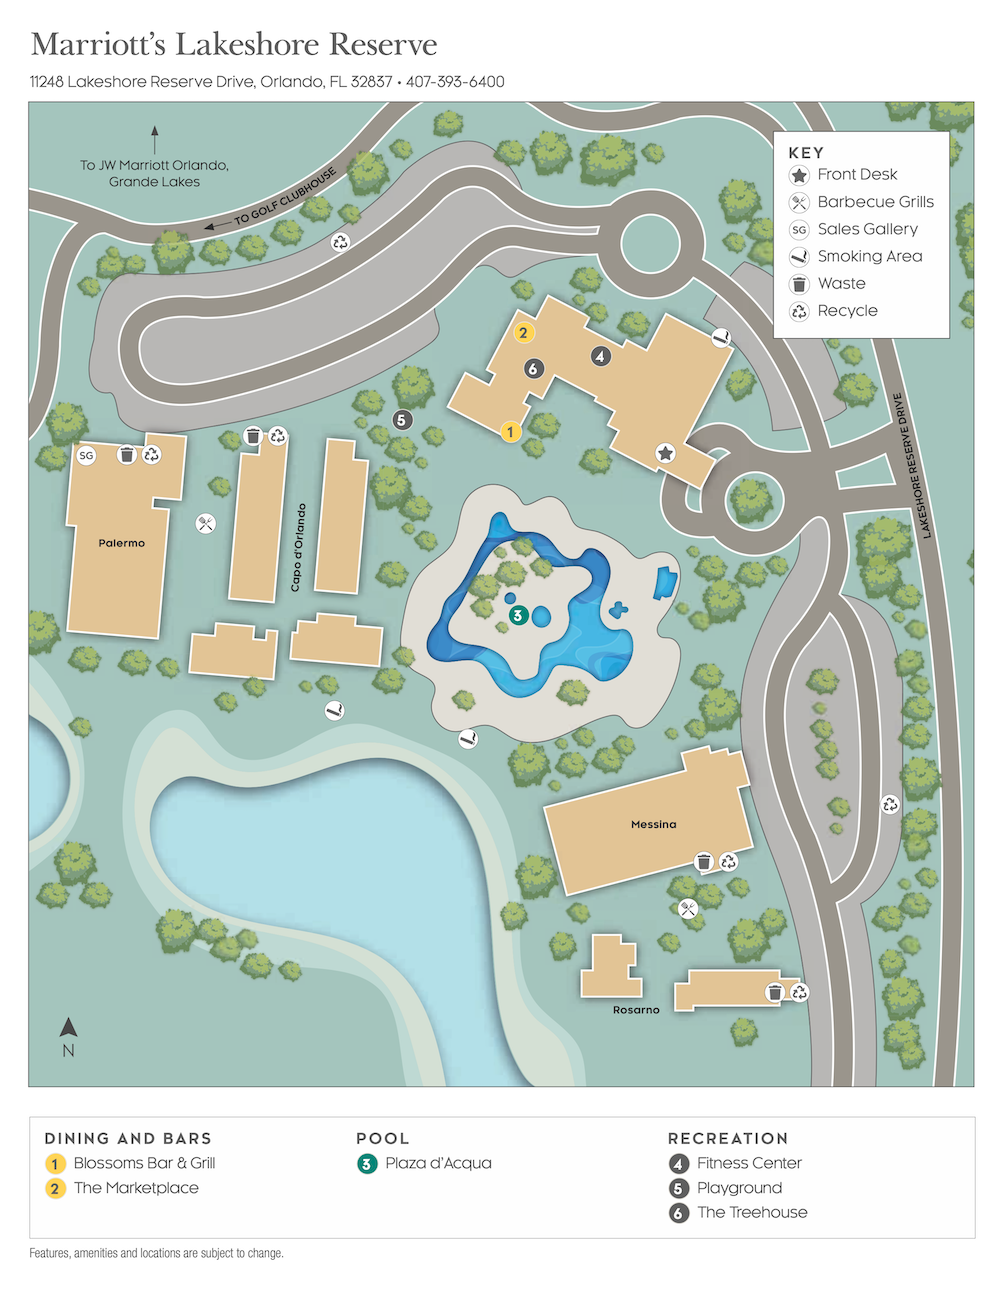 Marriott Lakeshore Reserve Resort Map